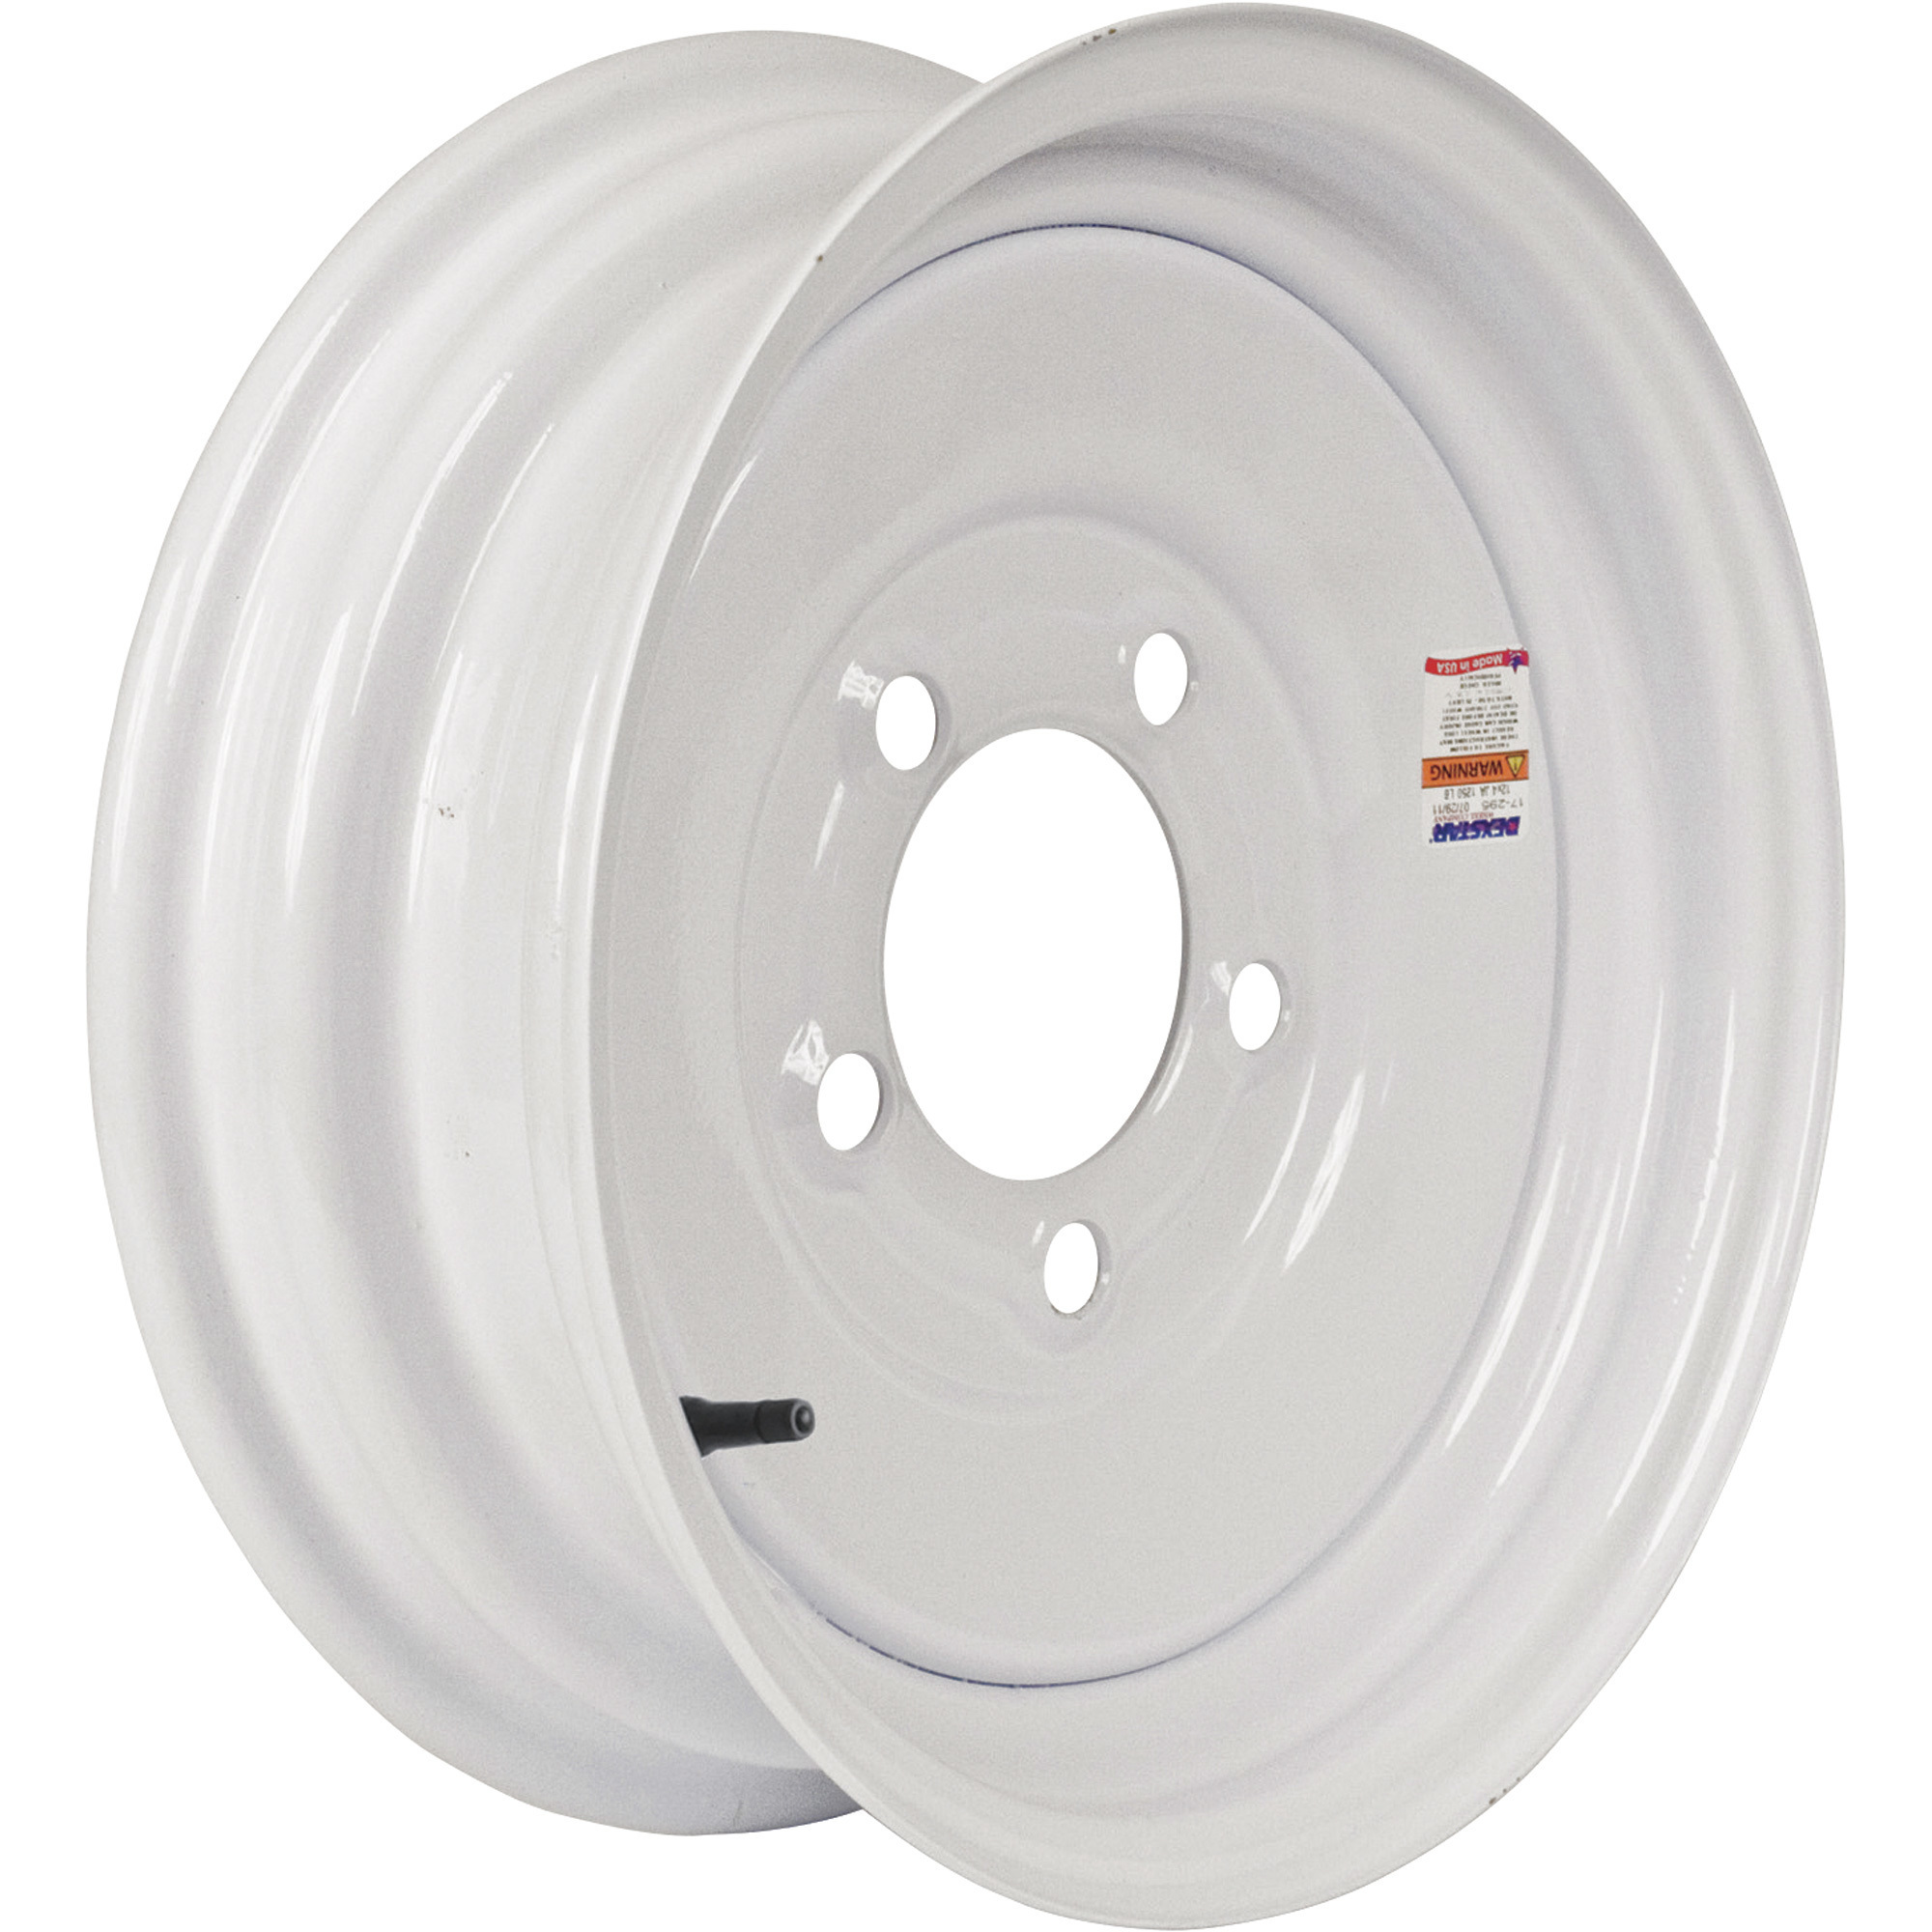 Martin Wheel 12Inch Standard Trailer Tire Wheel â Rim Only, Fits Tire Sizes 4.80 x 12, 5.30 x 12, 5-Hole, Model R-125-VN